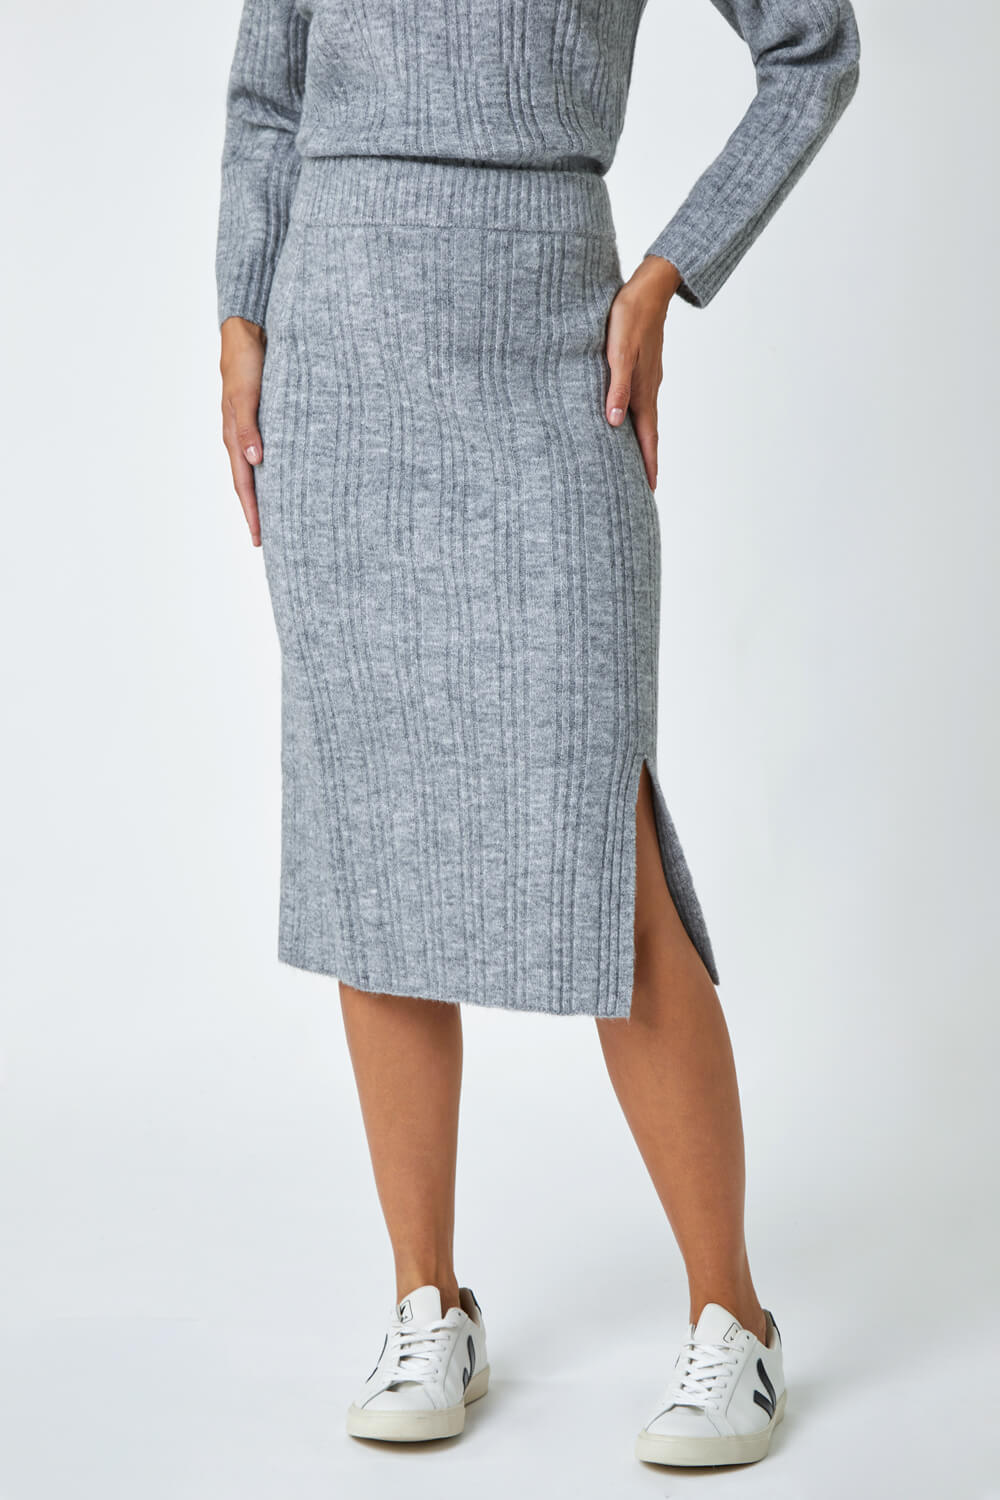 Grey Ribbed Side Split Knit Pencil Skirt, Image 4 of 5